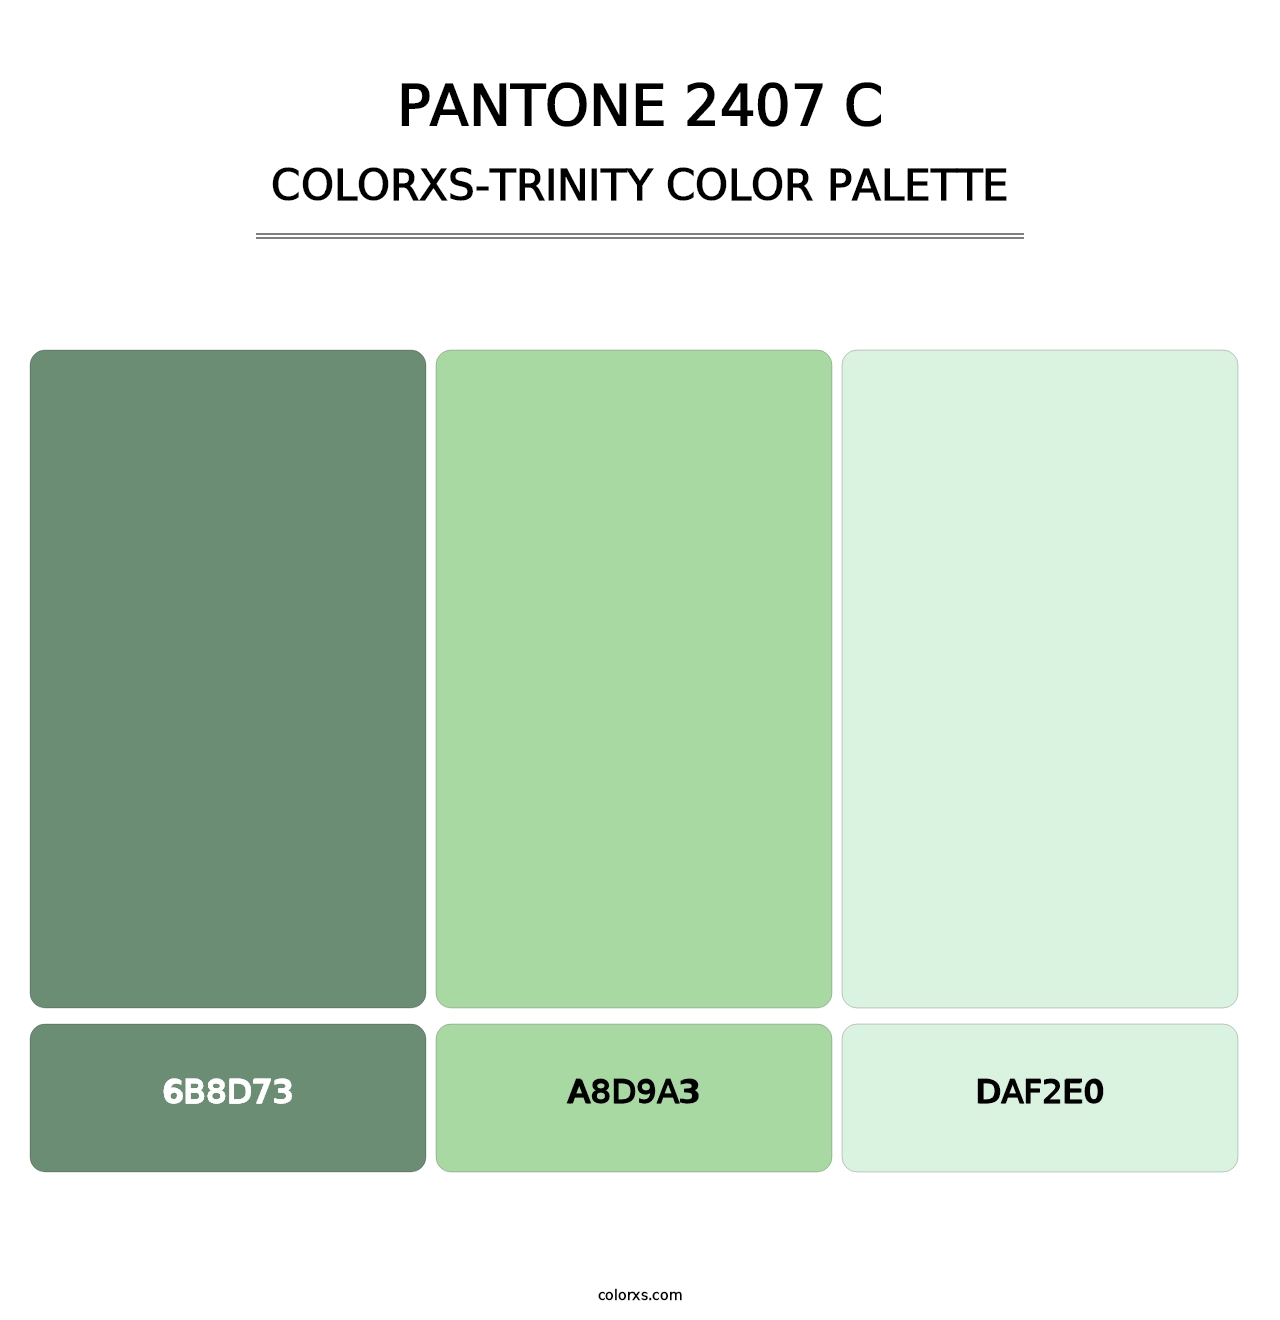 PANTONE 2407 C - Colorxs Trinity Palette